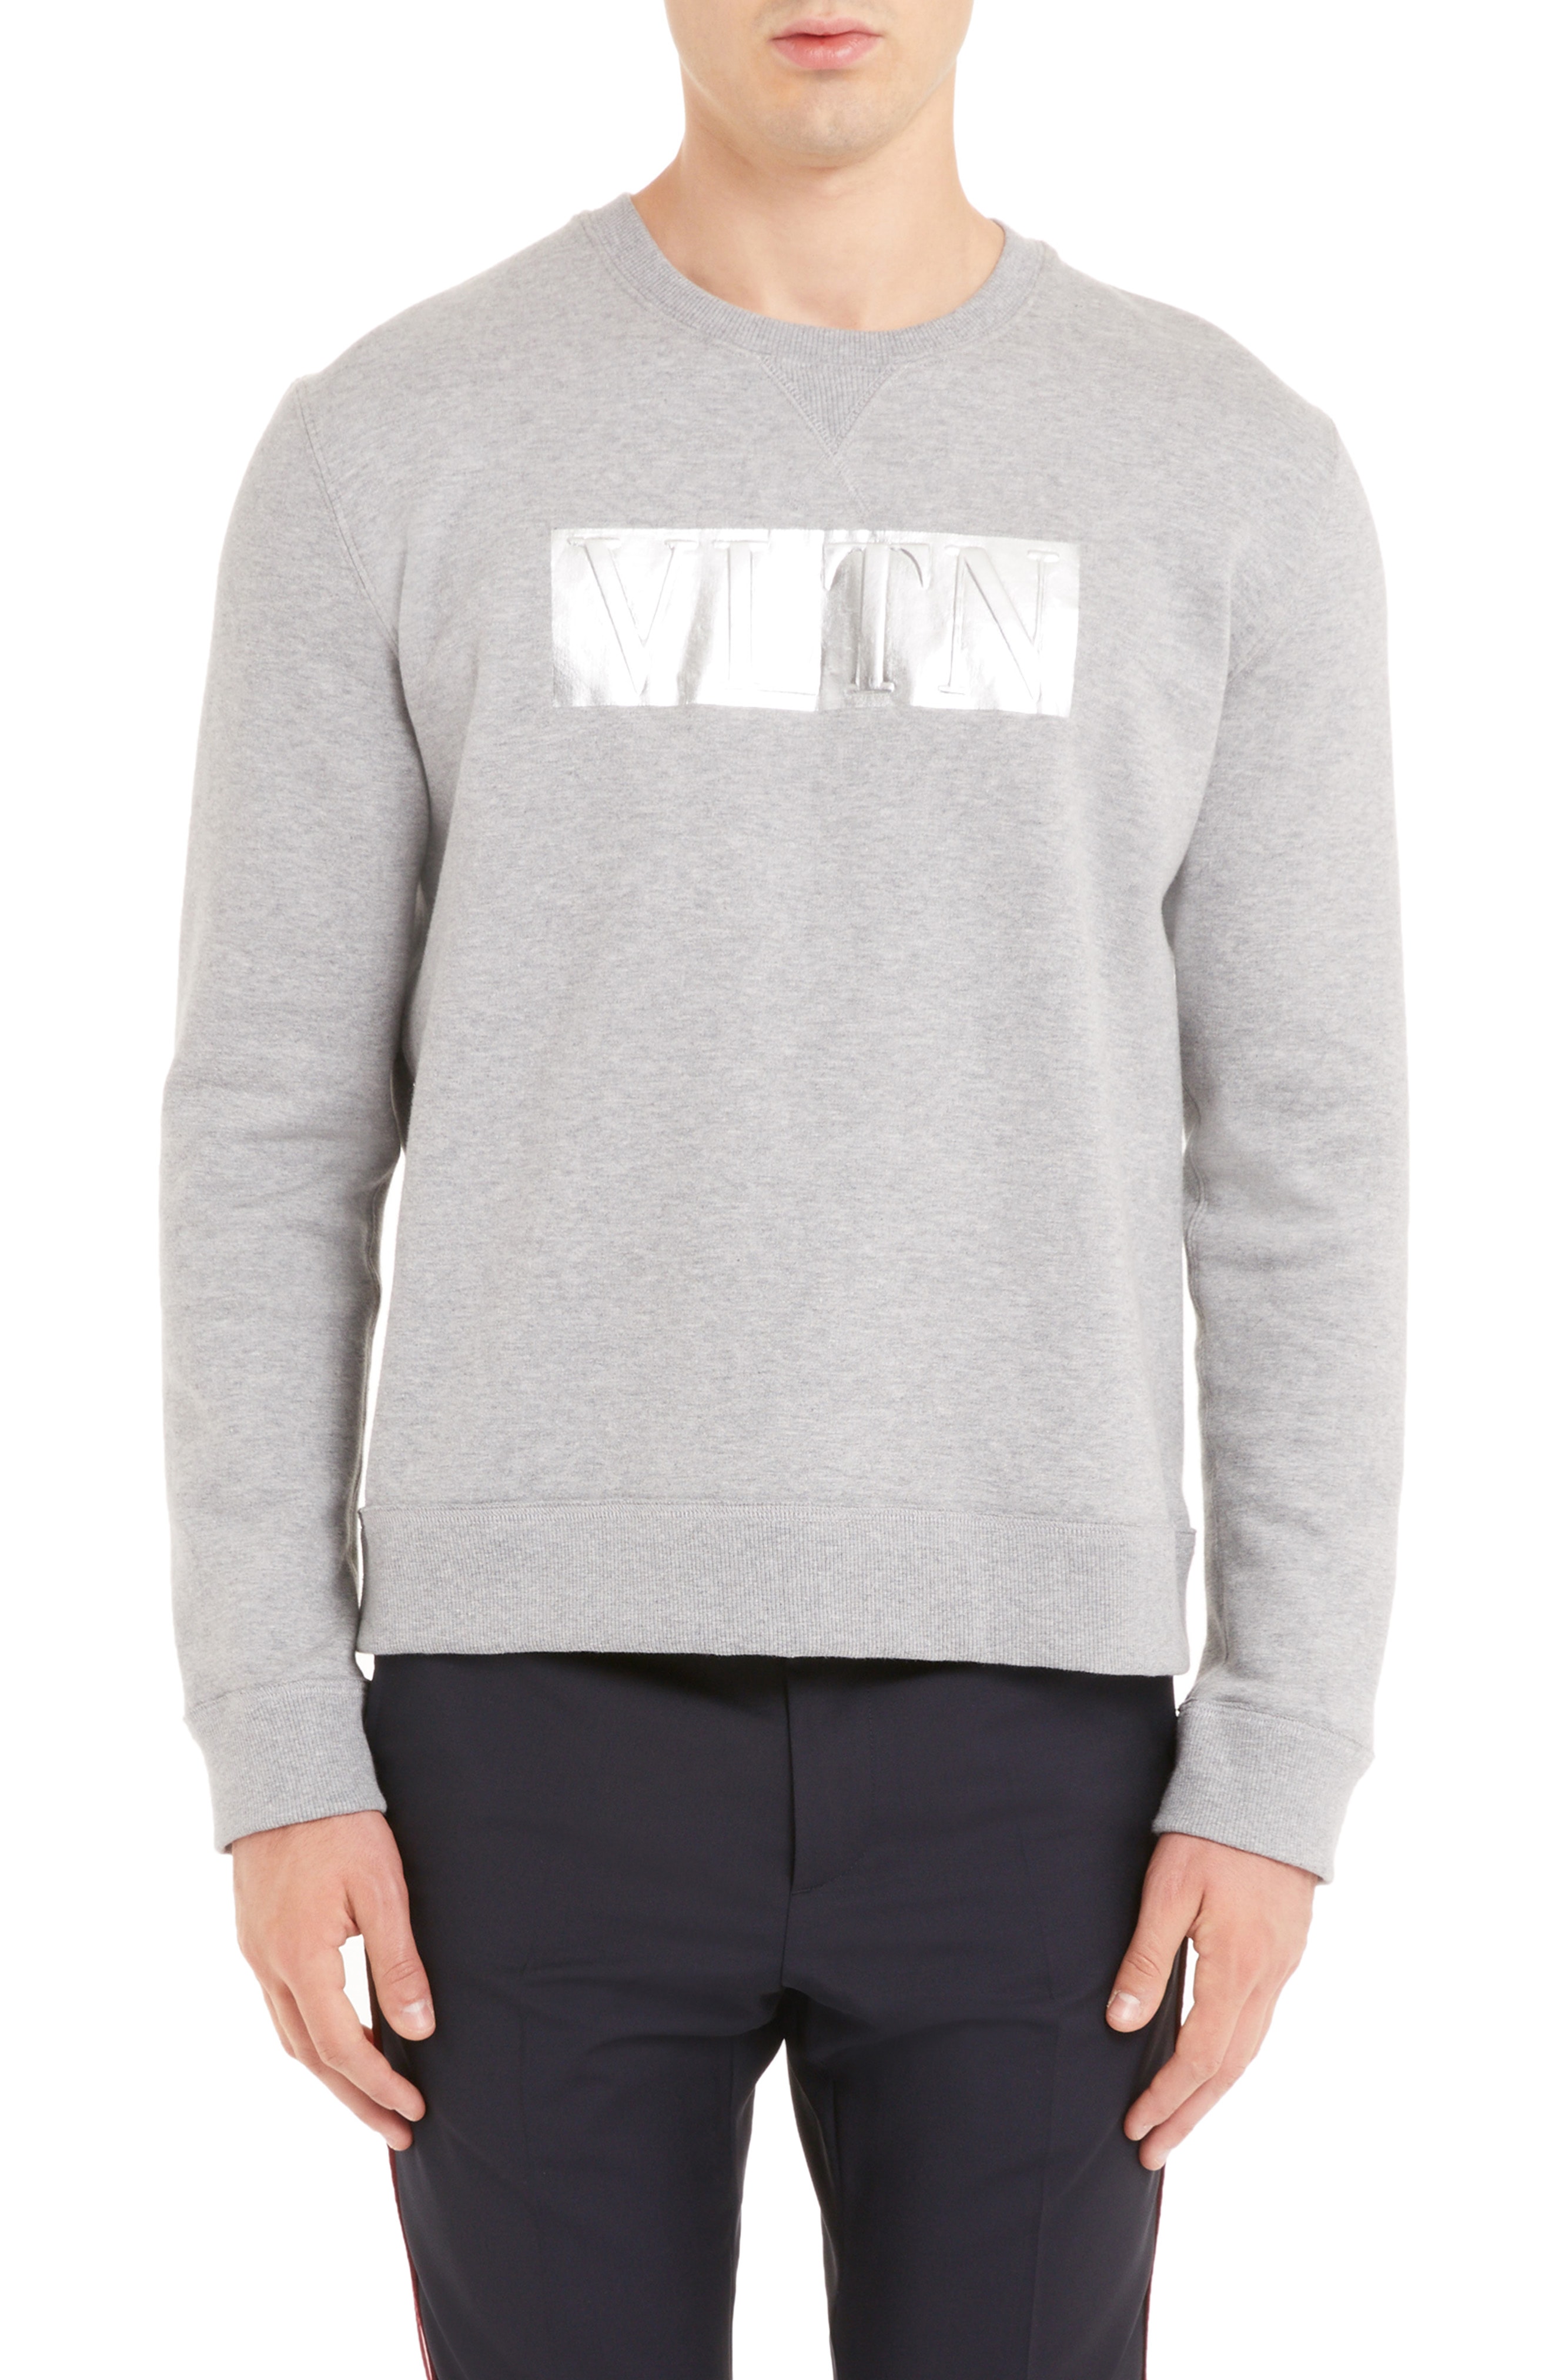 Men’s Valentino Vltn Logo Sweatshirt, Size XX-Large - Grey | The ...